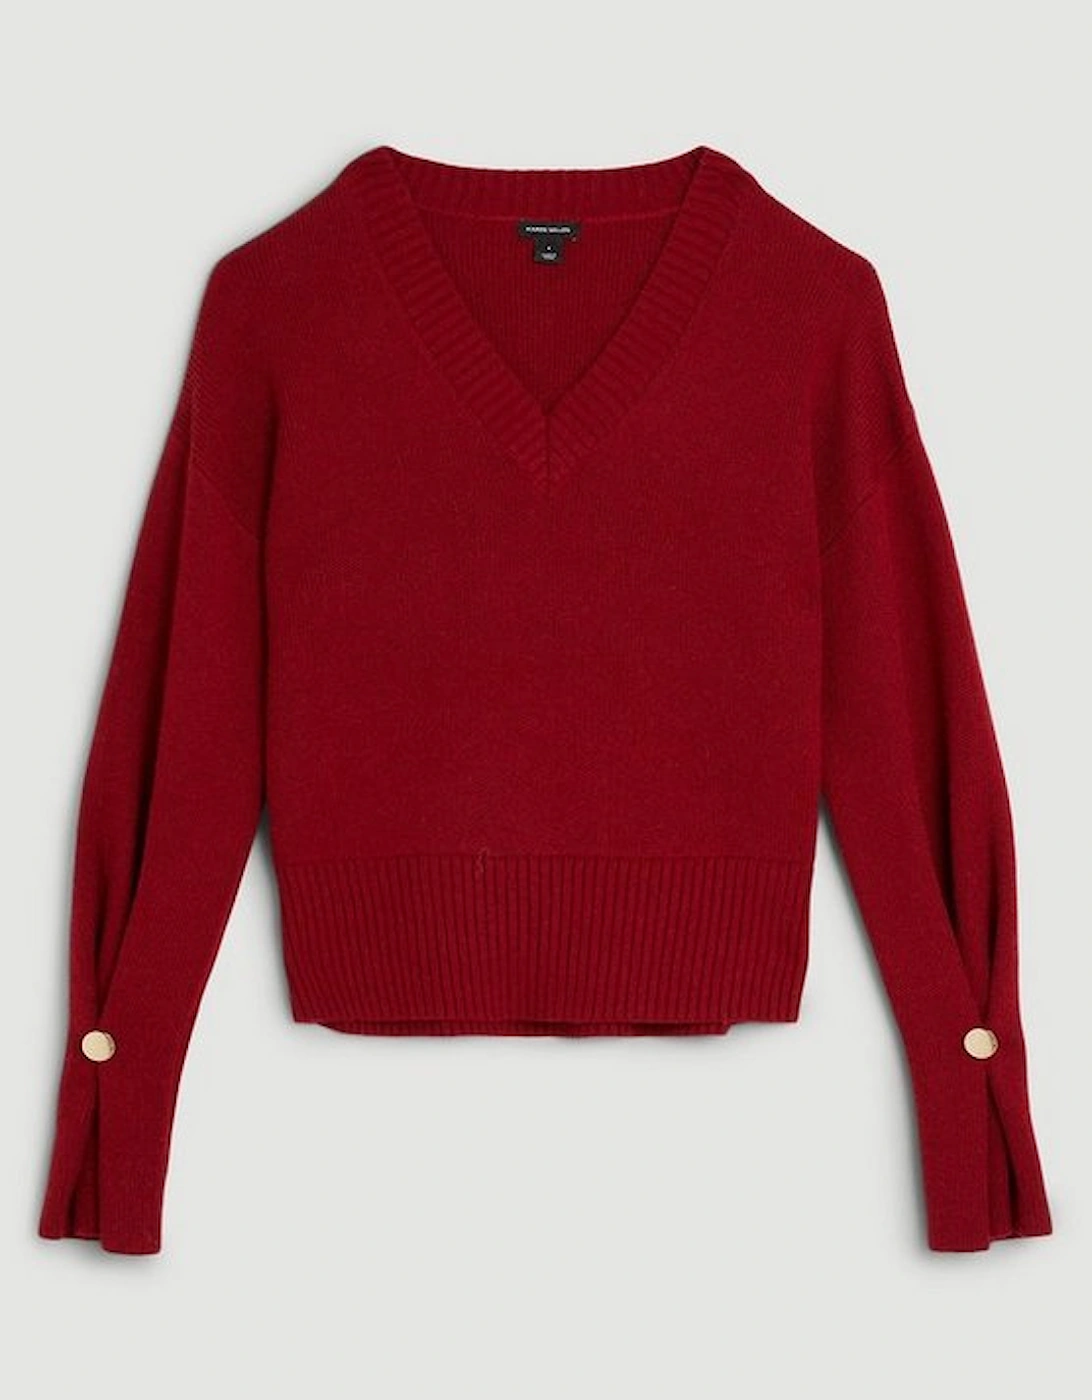 V Neck Premium Alpaca Wool Blend Mid Weight Full Sleeve Knit Jumper